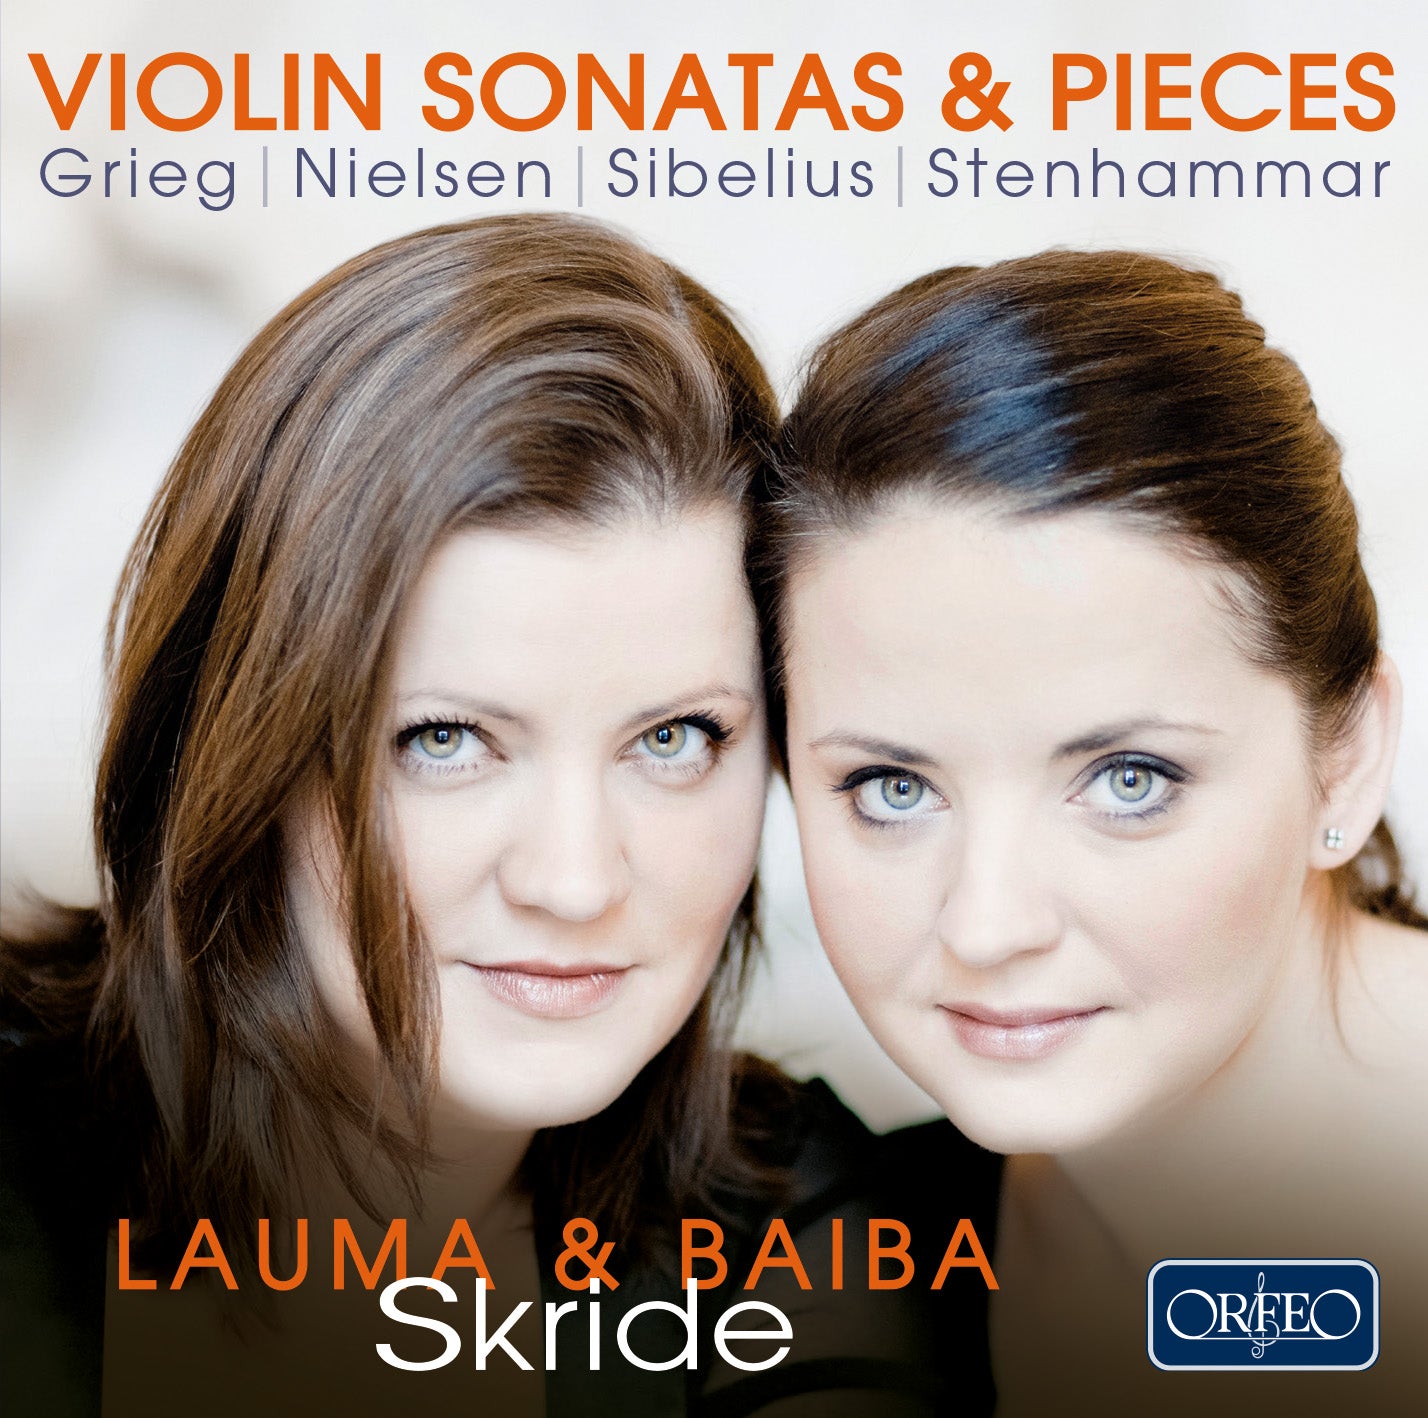 Violin Sonatas & Pieces / Lauma & Baiba Skride